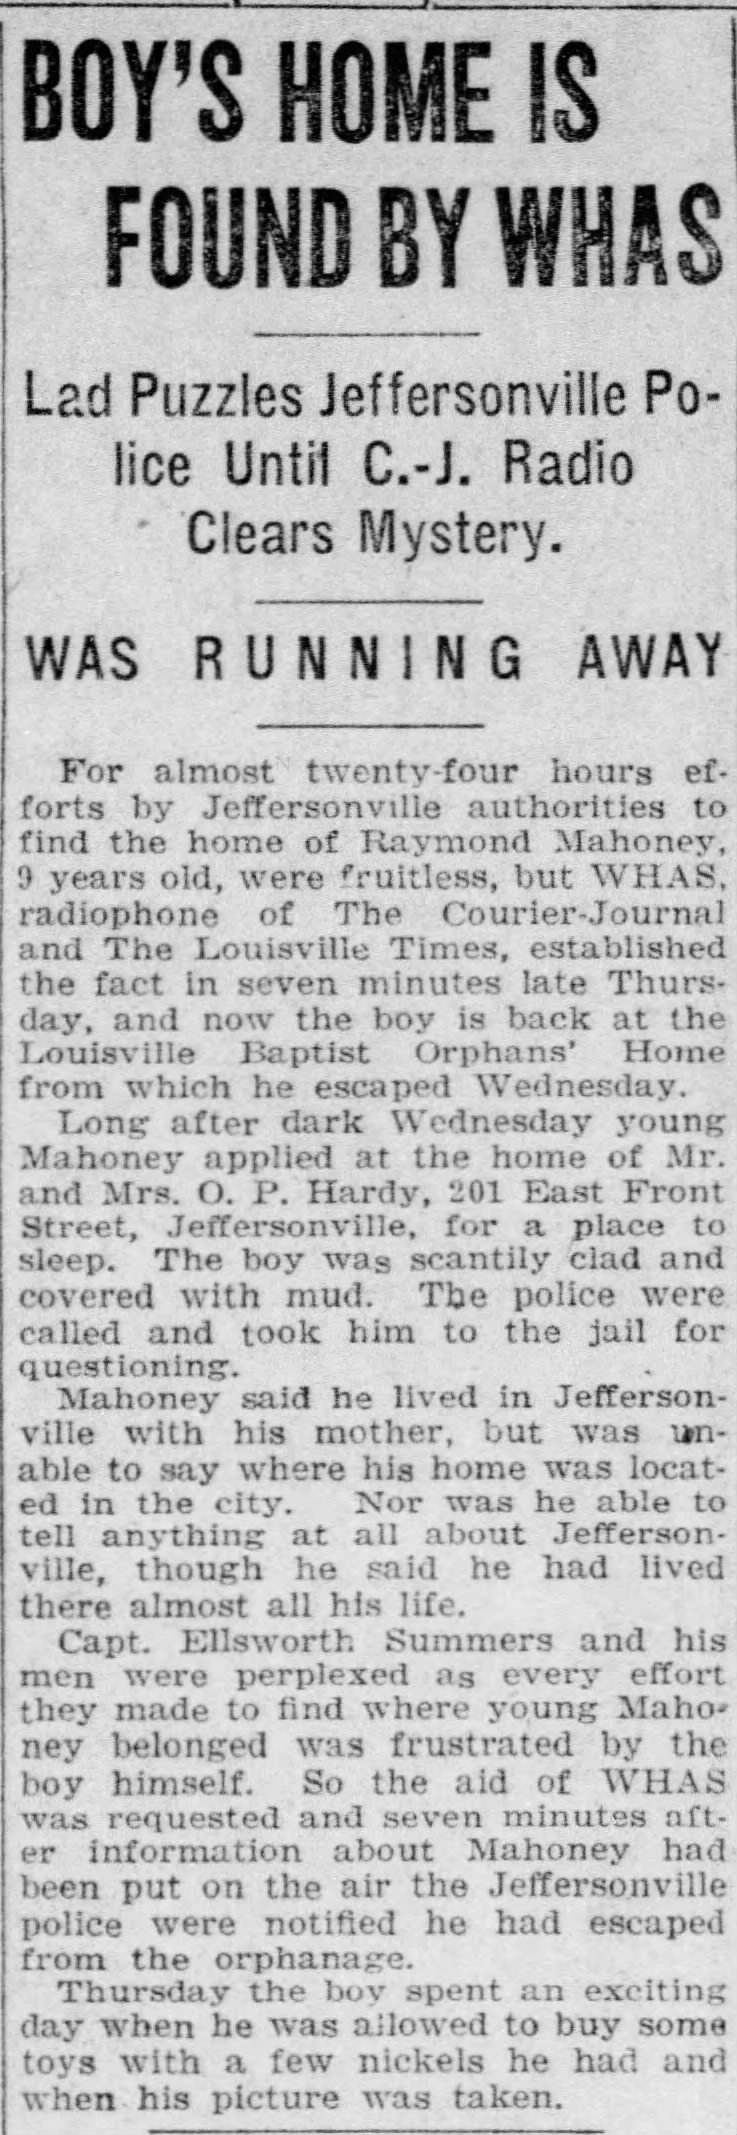 Raymond Mahoney at age 10 ran away from Louisville Baptist Orphans' Home